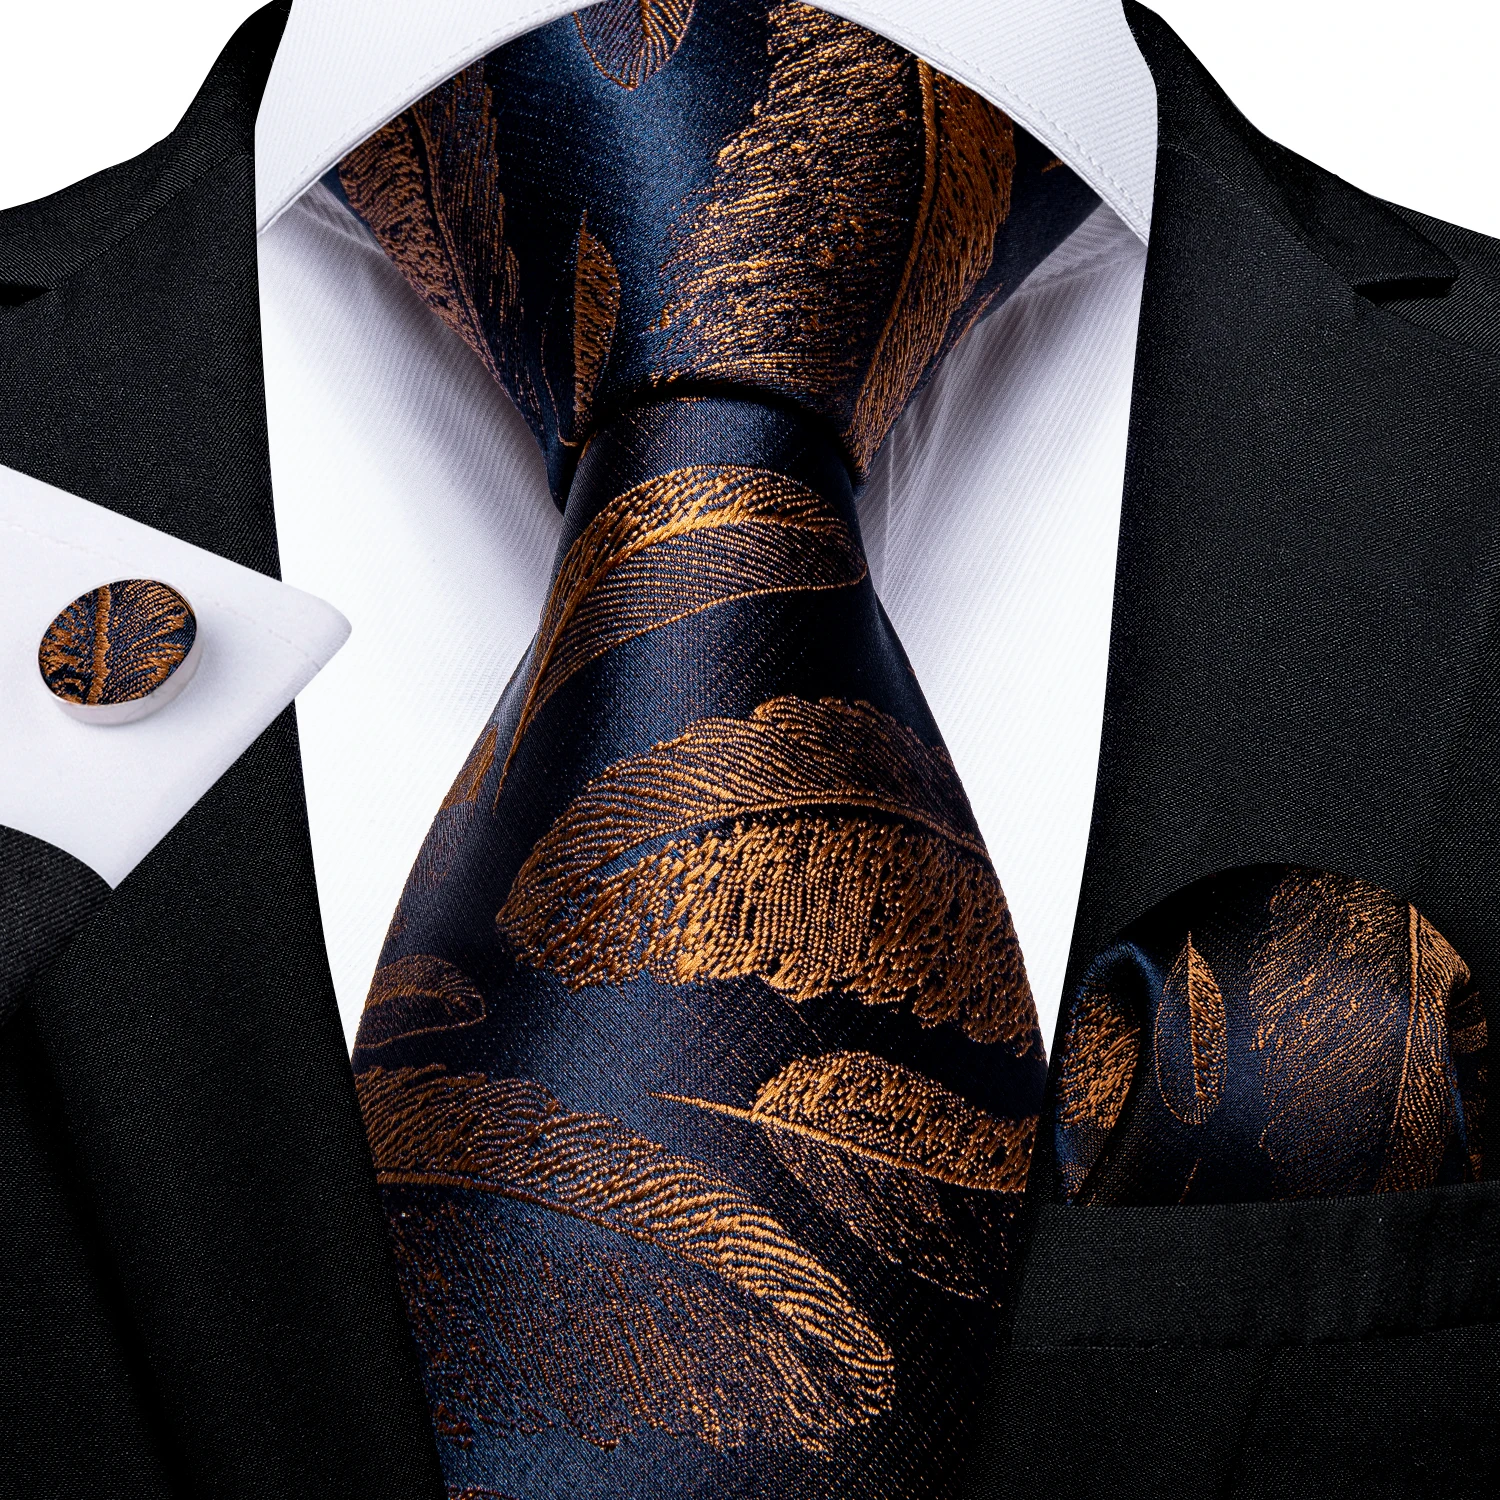 Classic-Navy-Blue-Men-s-Tie-Striped-Paisley-Floral-Necktie-Pocket-Square-Cufflinks-Business-Tie-Set.jpg